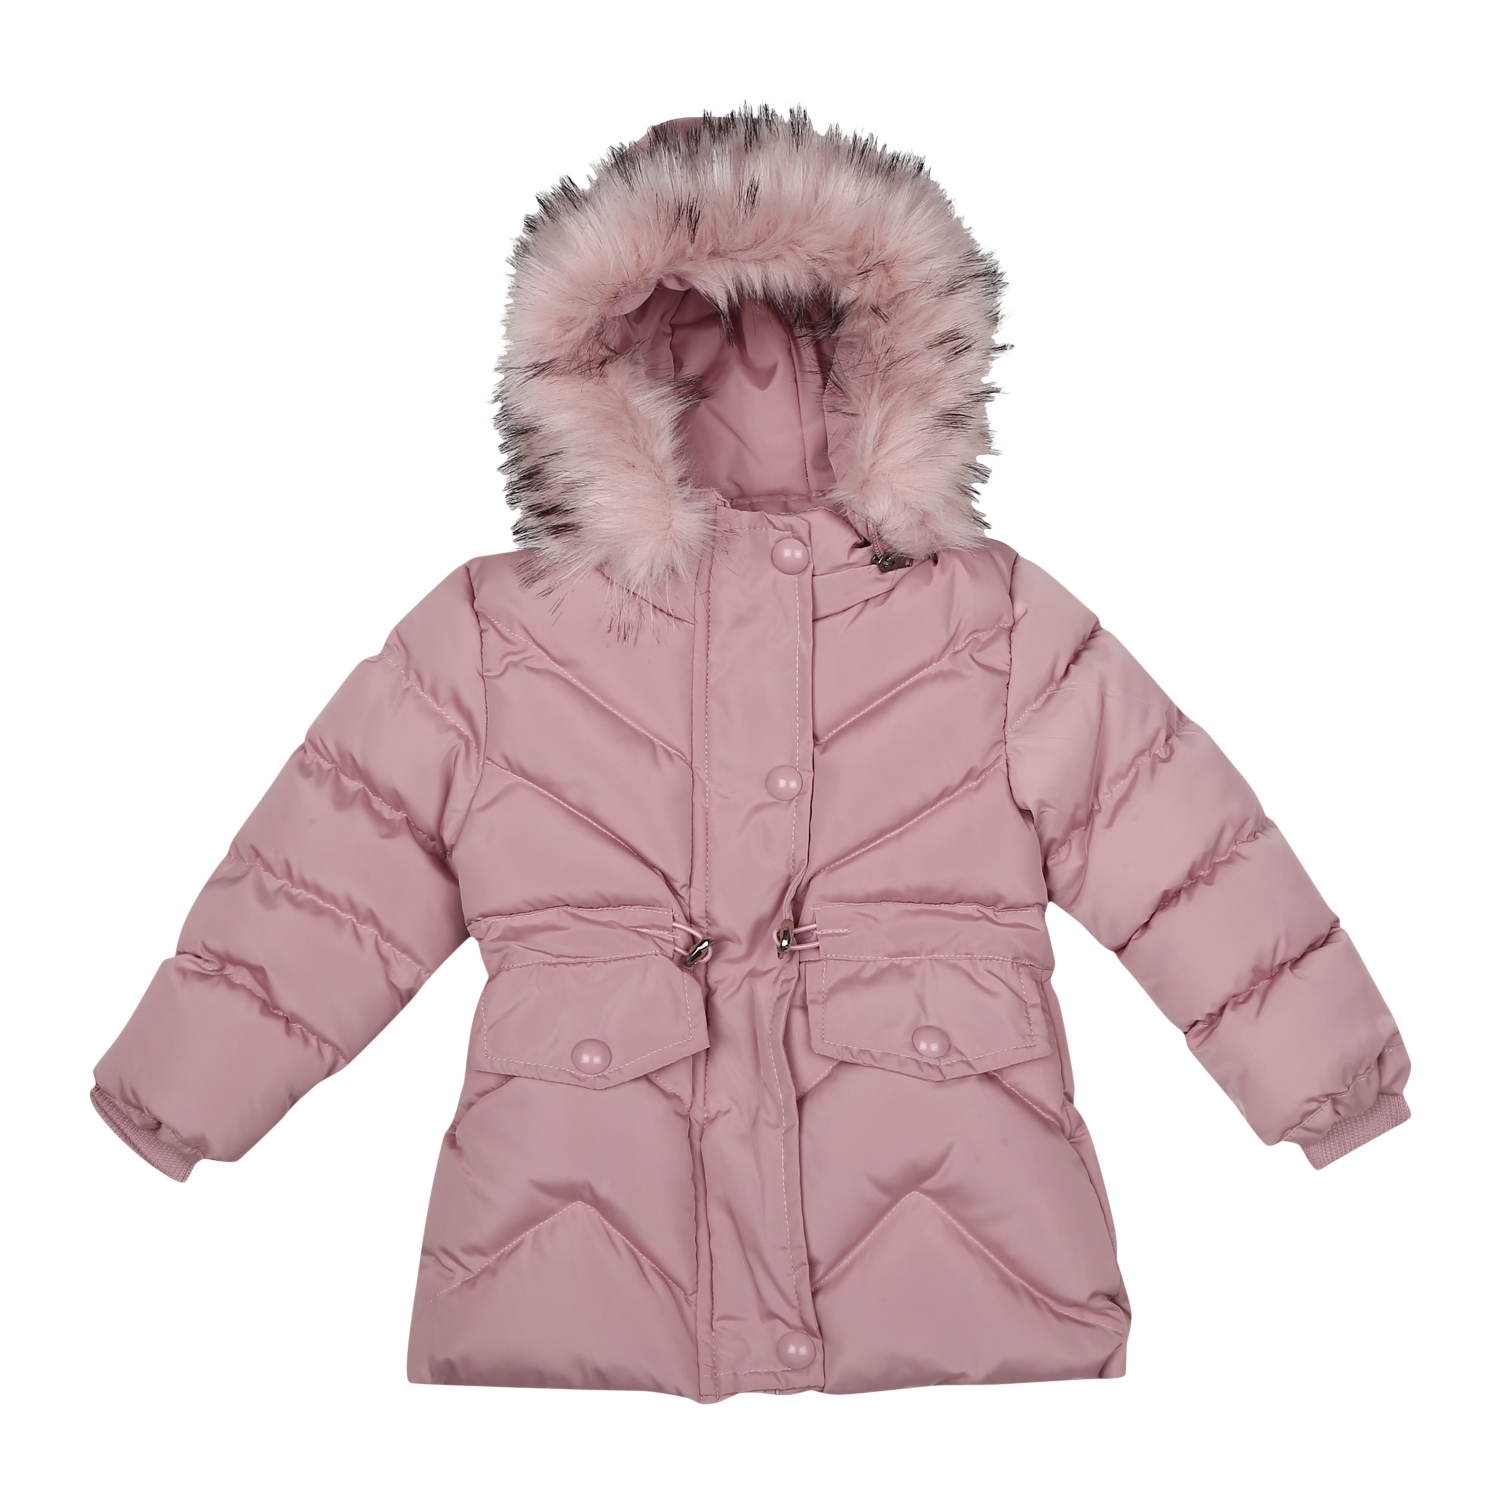 Mothercare | Girls Full sleeves Jacket - Pink